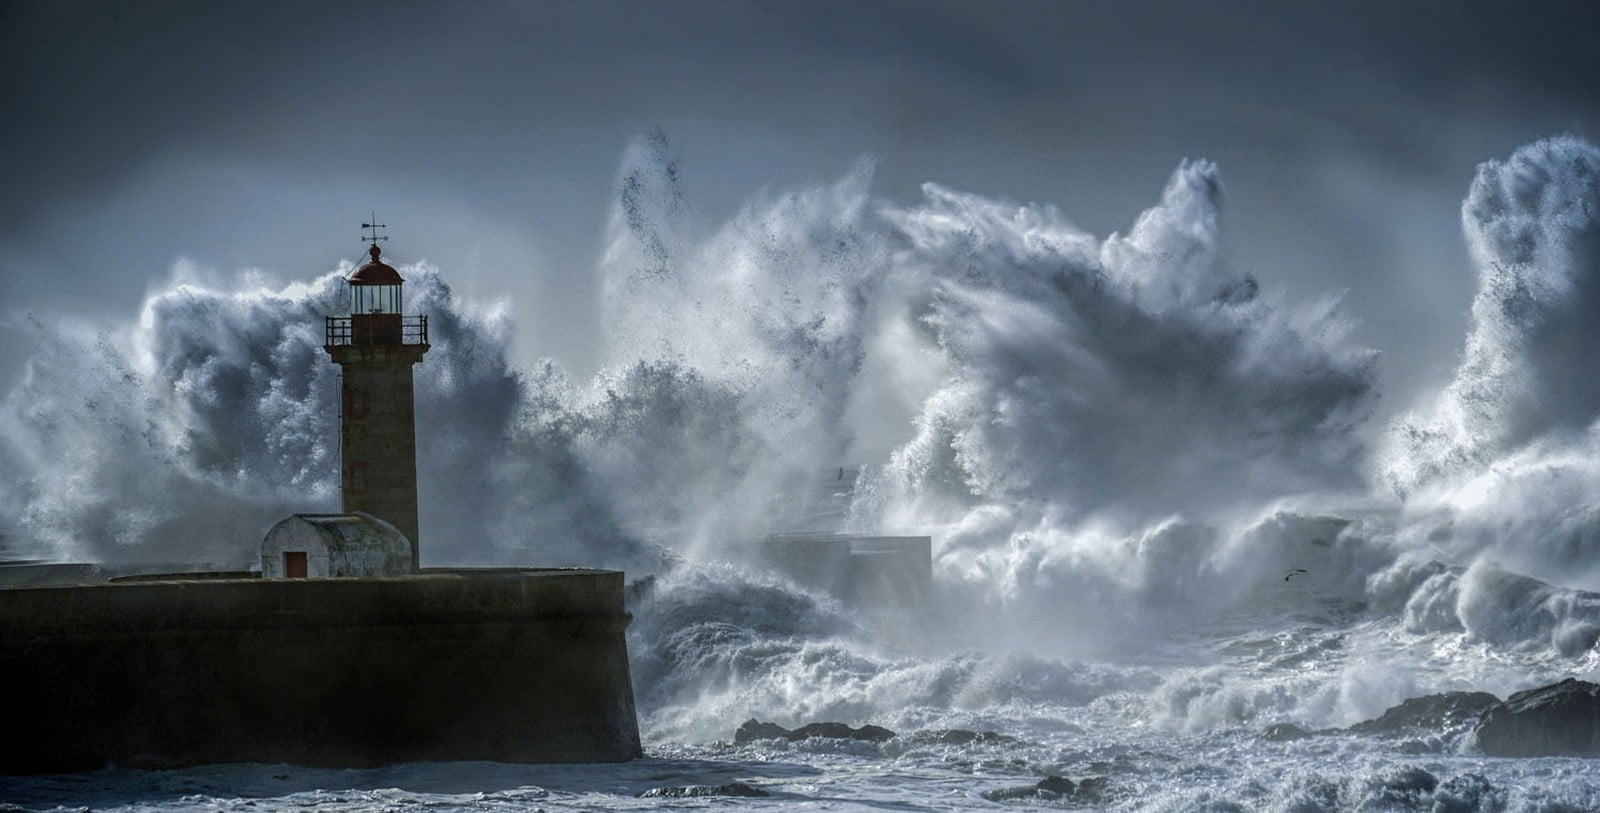 crashing big waves in front of lighthouse illustration, photography